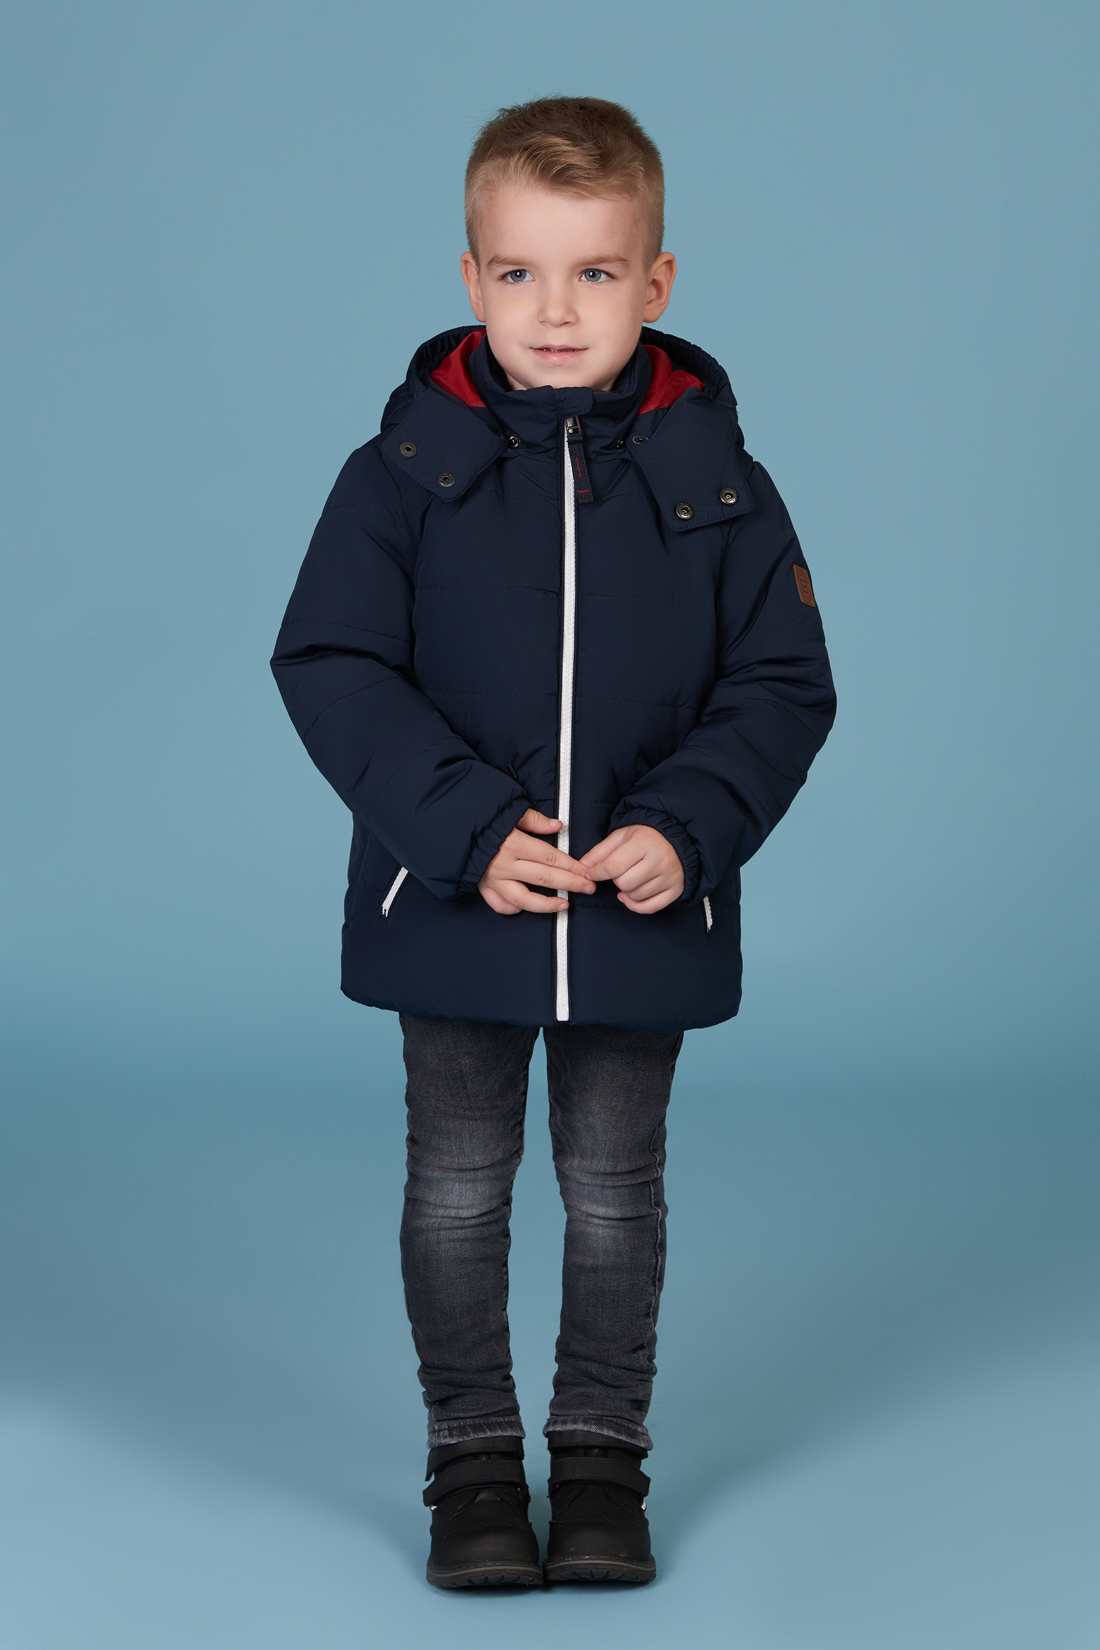 Куртка для мальчика (арт. baon BK537503), размер 122-128, цвет синий Куртка для мальчика (арт. baon BK537503) - фото 1